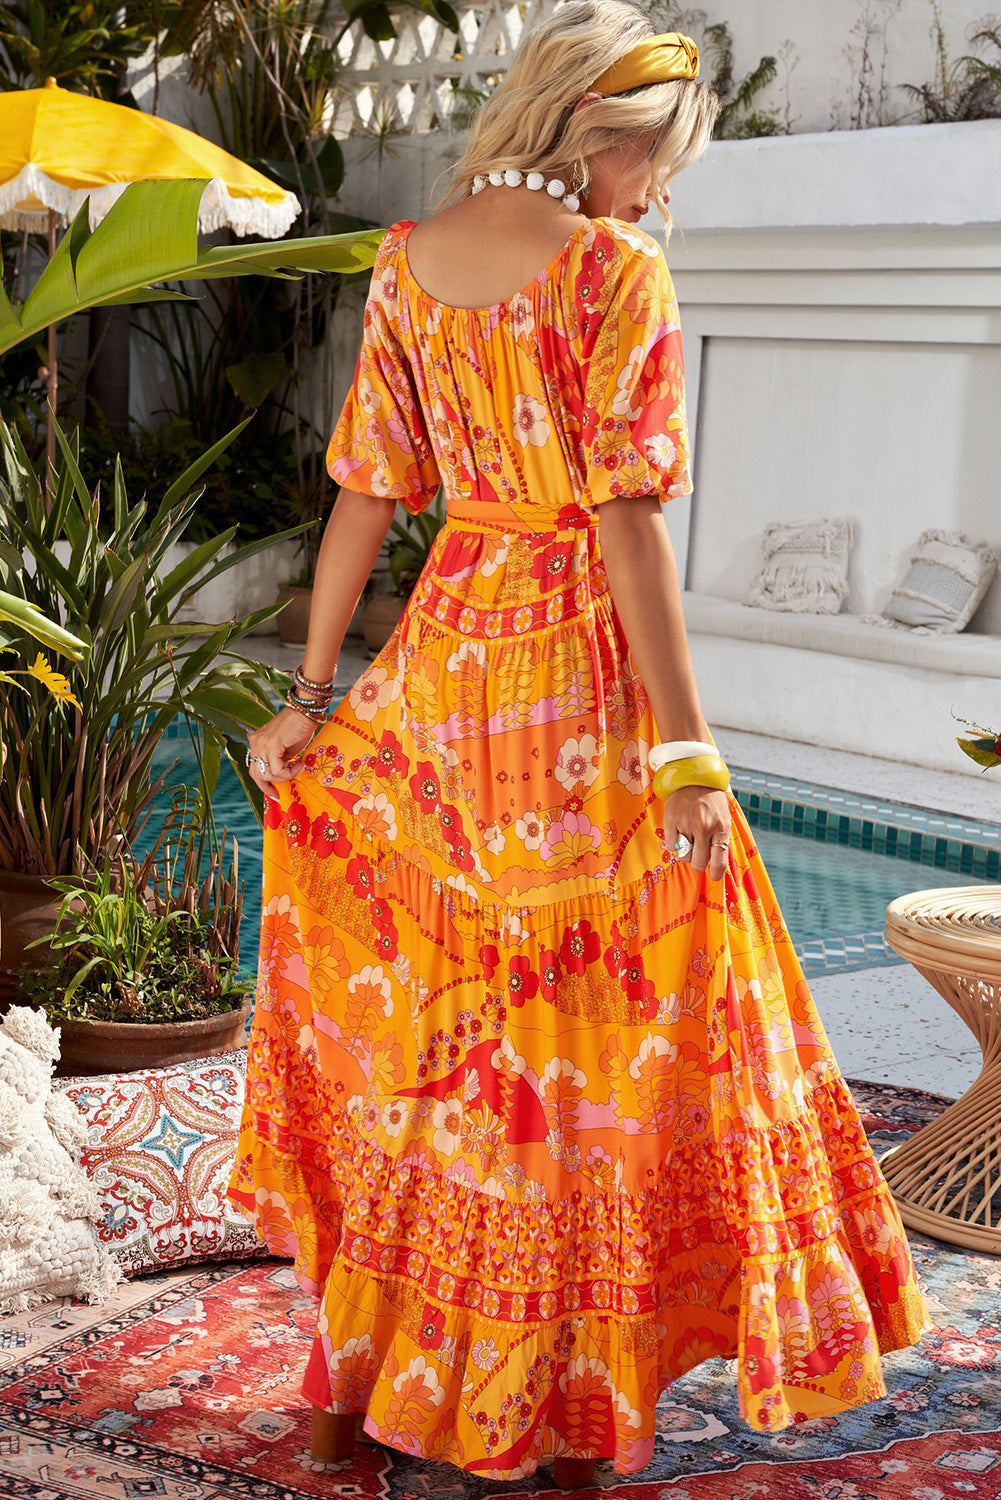 Orange Boho Empire Waist Floral Long Dress